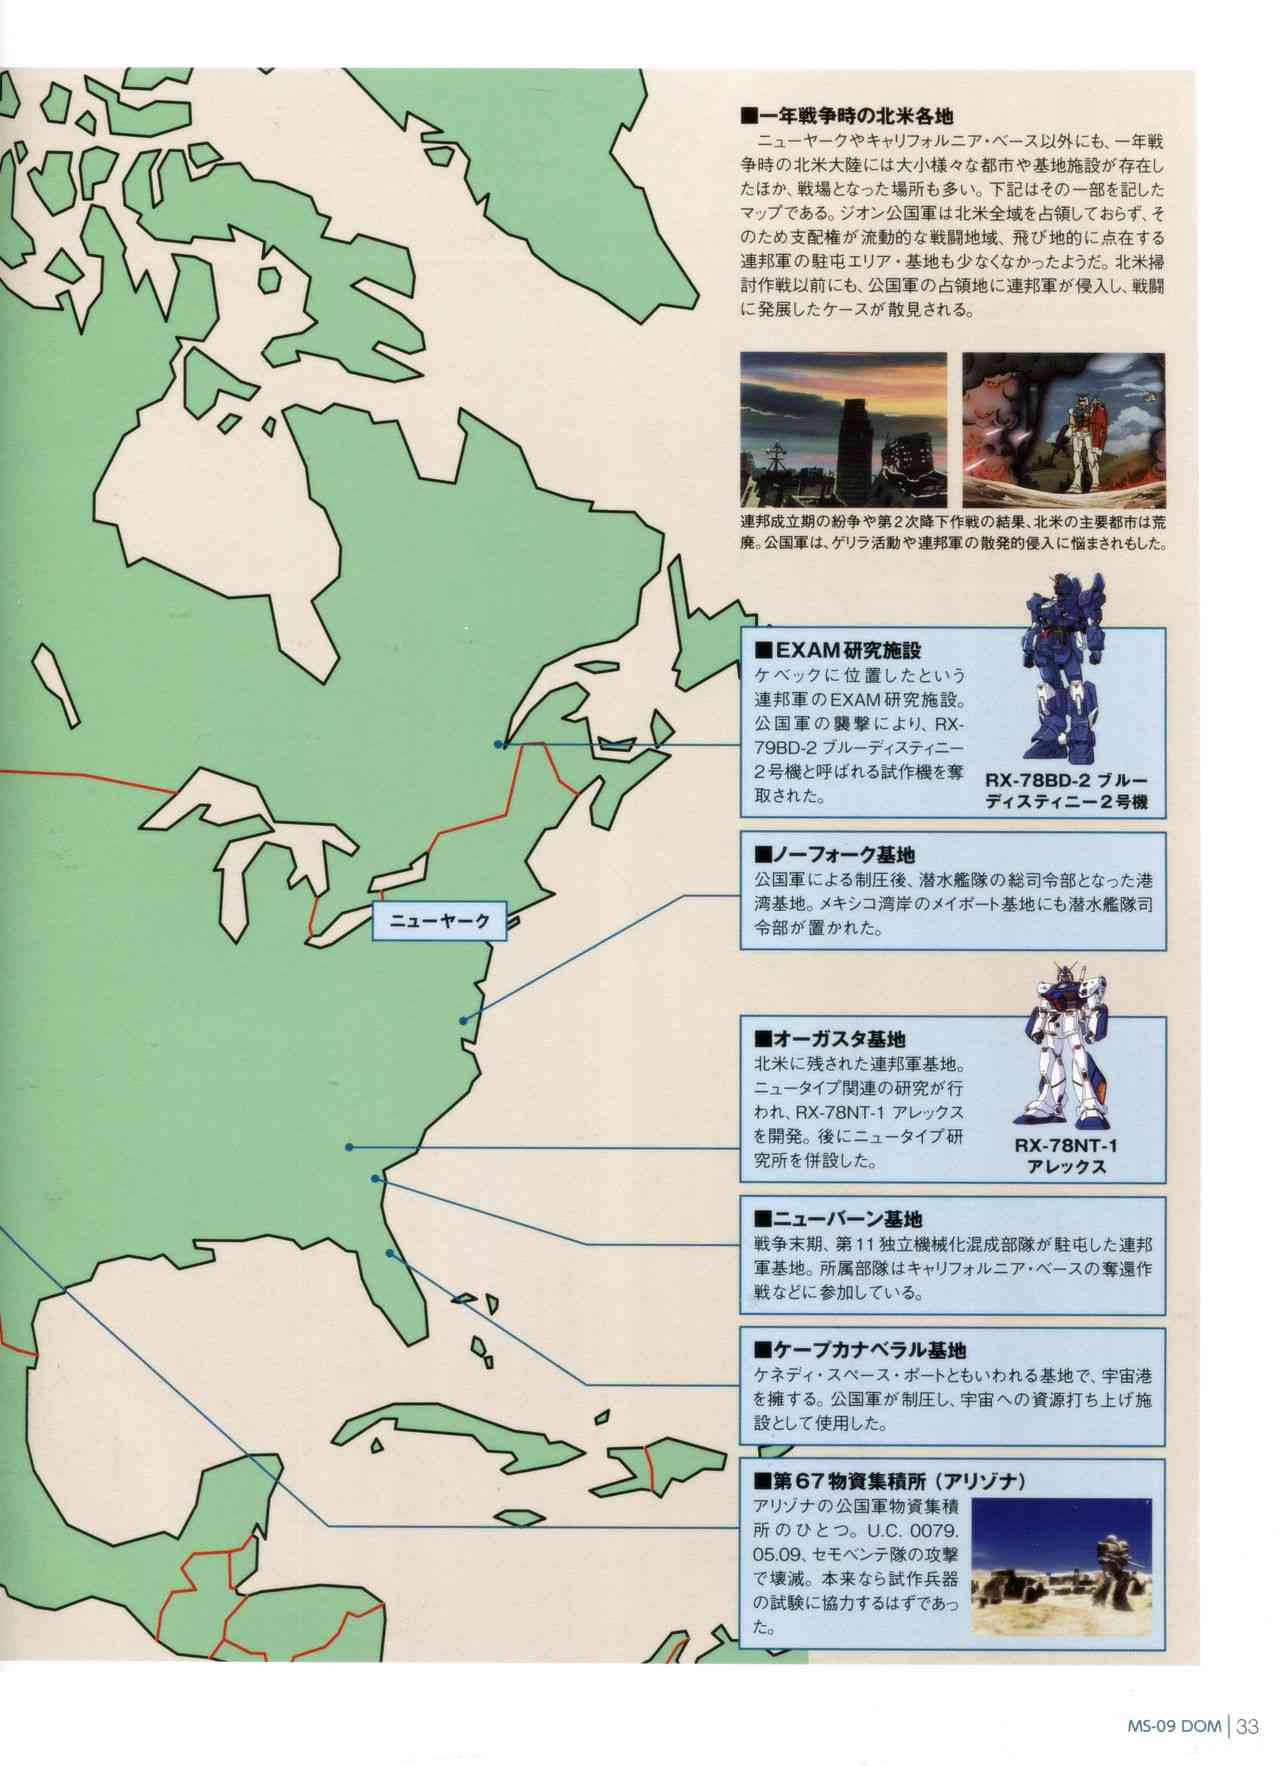 Gundam Mobile Suit Bible - 42卷 - 7